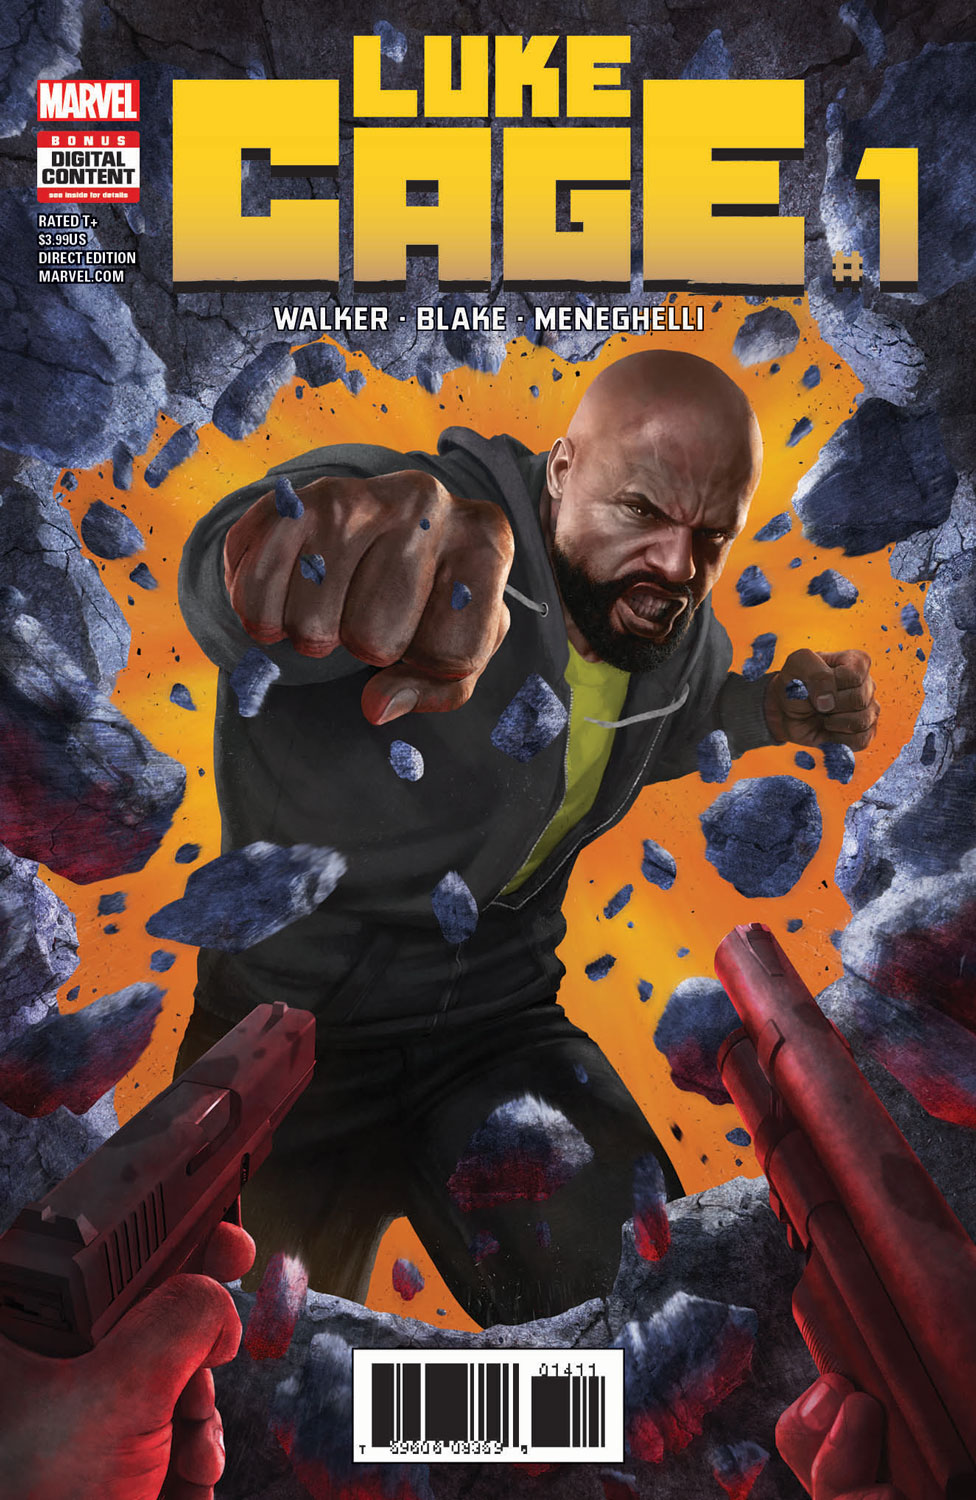 Marvel Preview: Luke Cage #1